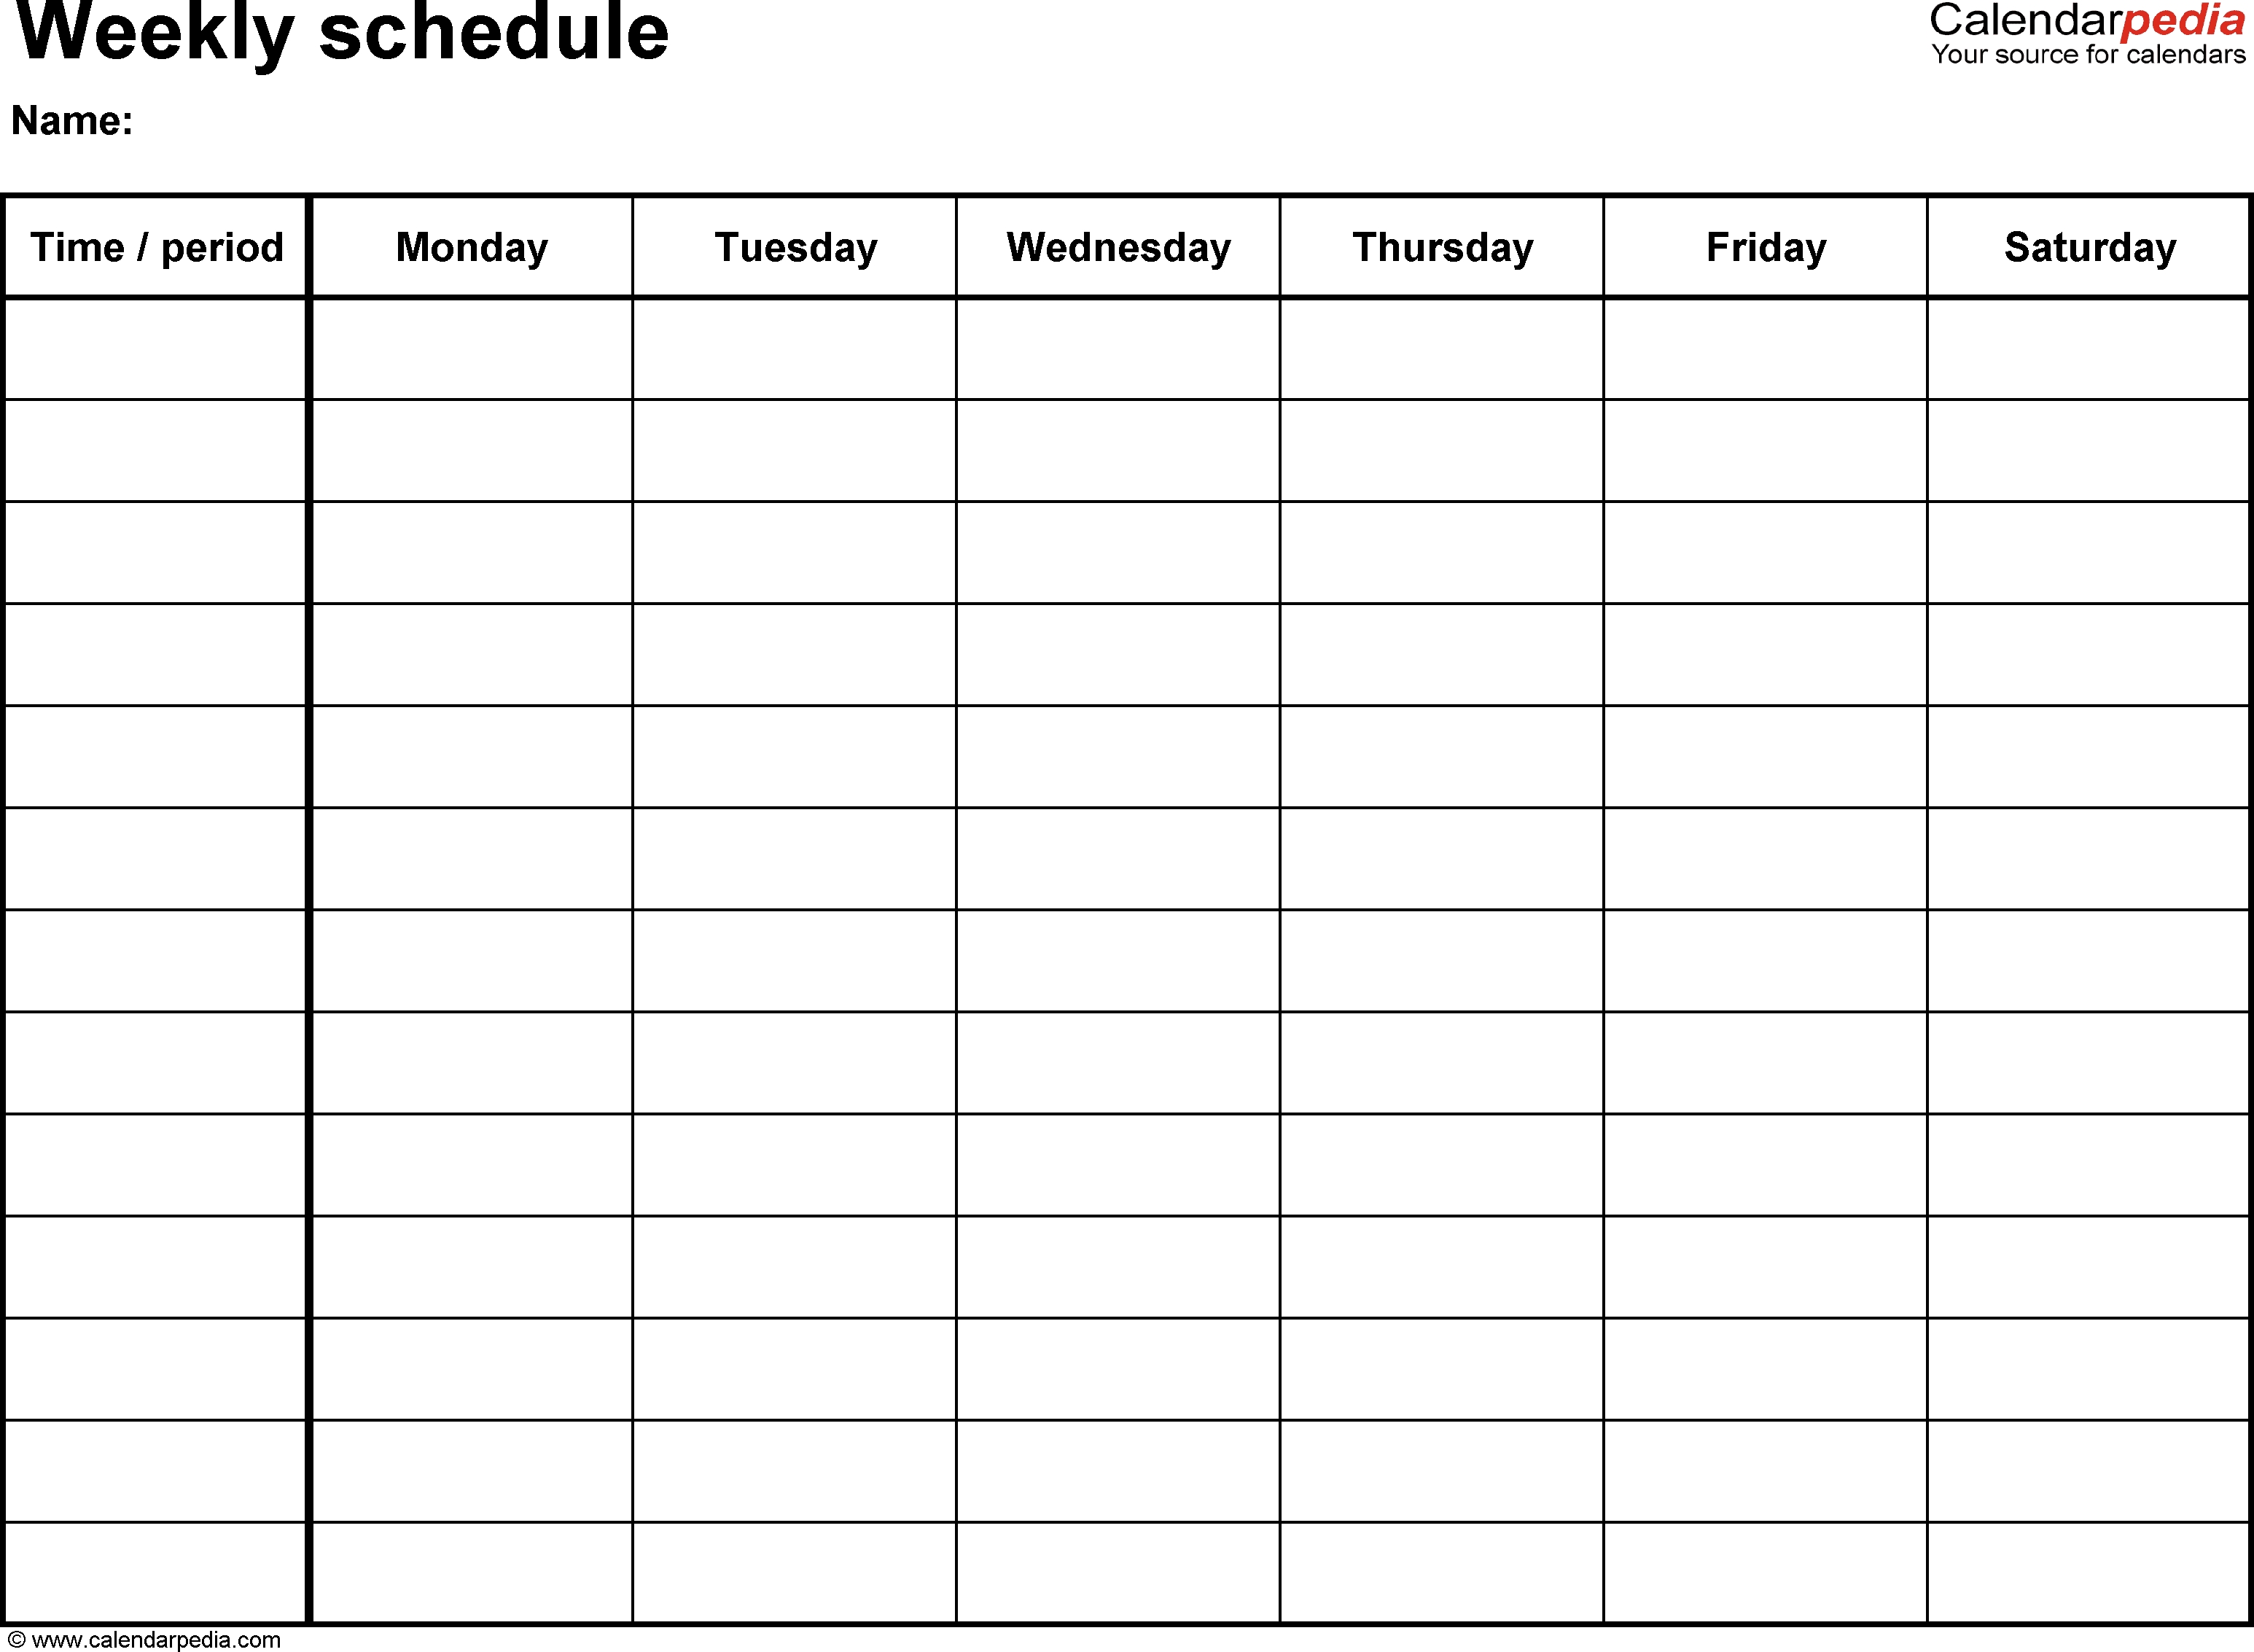 One Week Calendar Template Excel Schedule Free Weekly Templates For for Full Size Weekly Calendar Templates